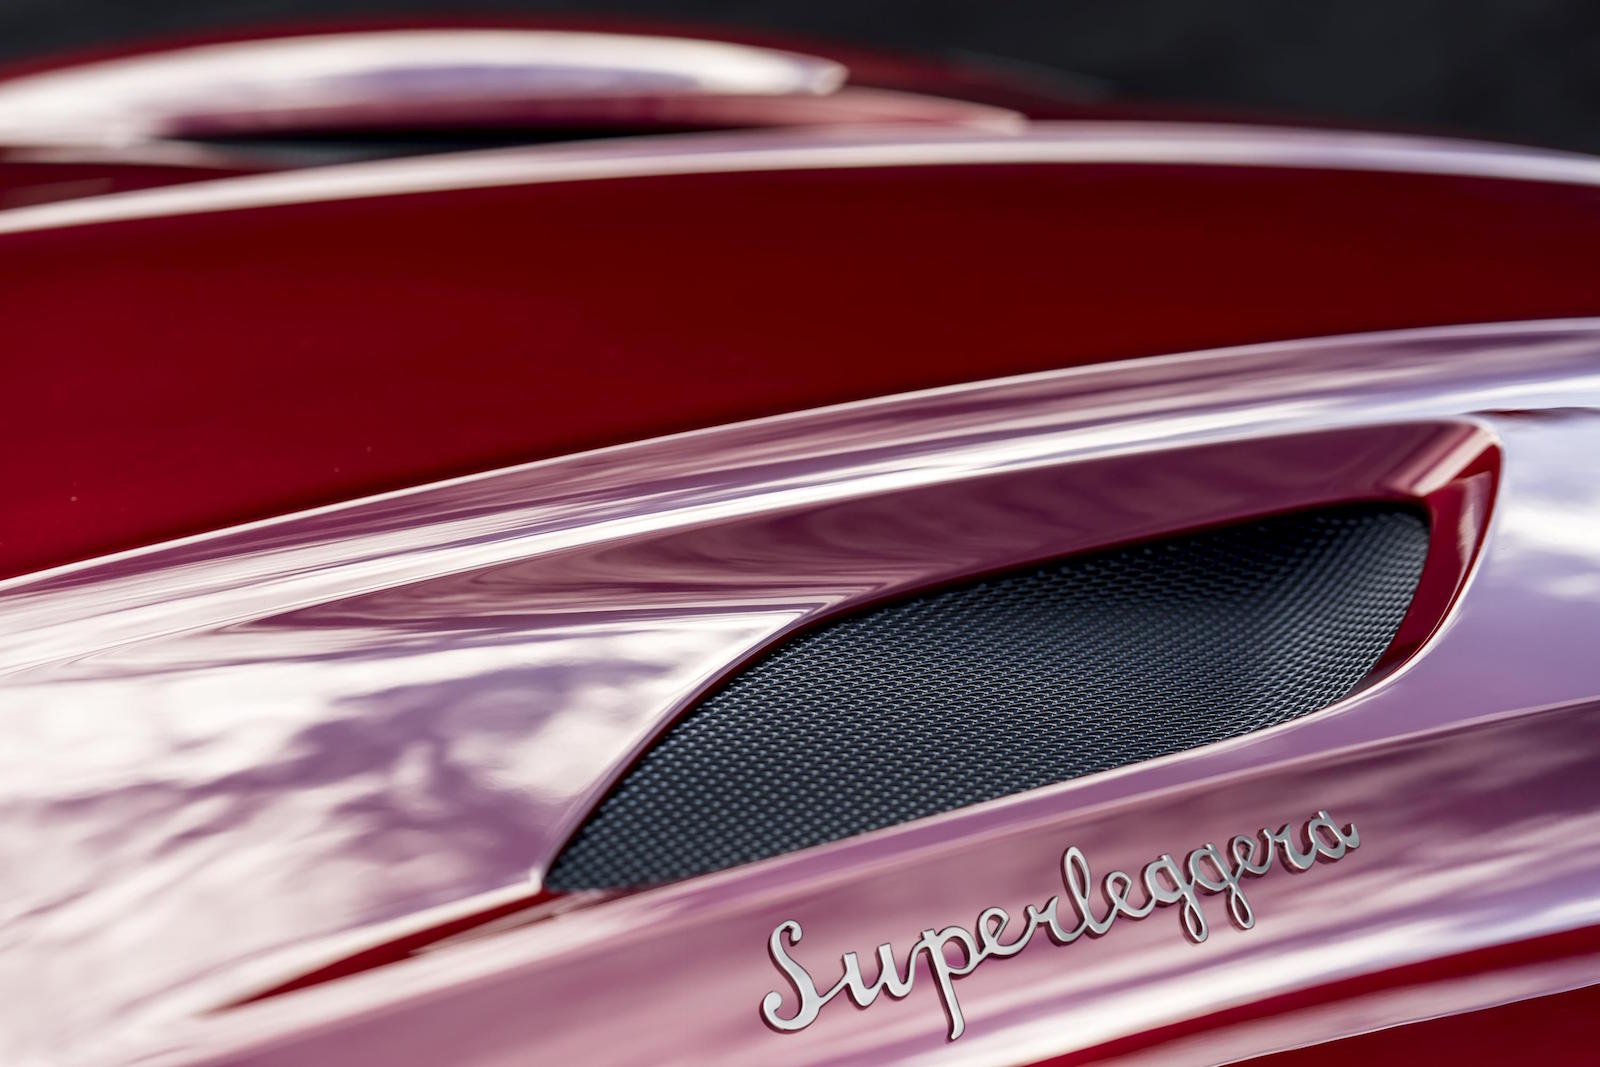 New Aston Martin DBS Superleggera planned, to be revealed soon